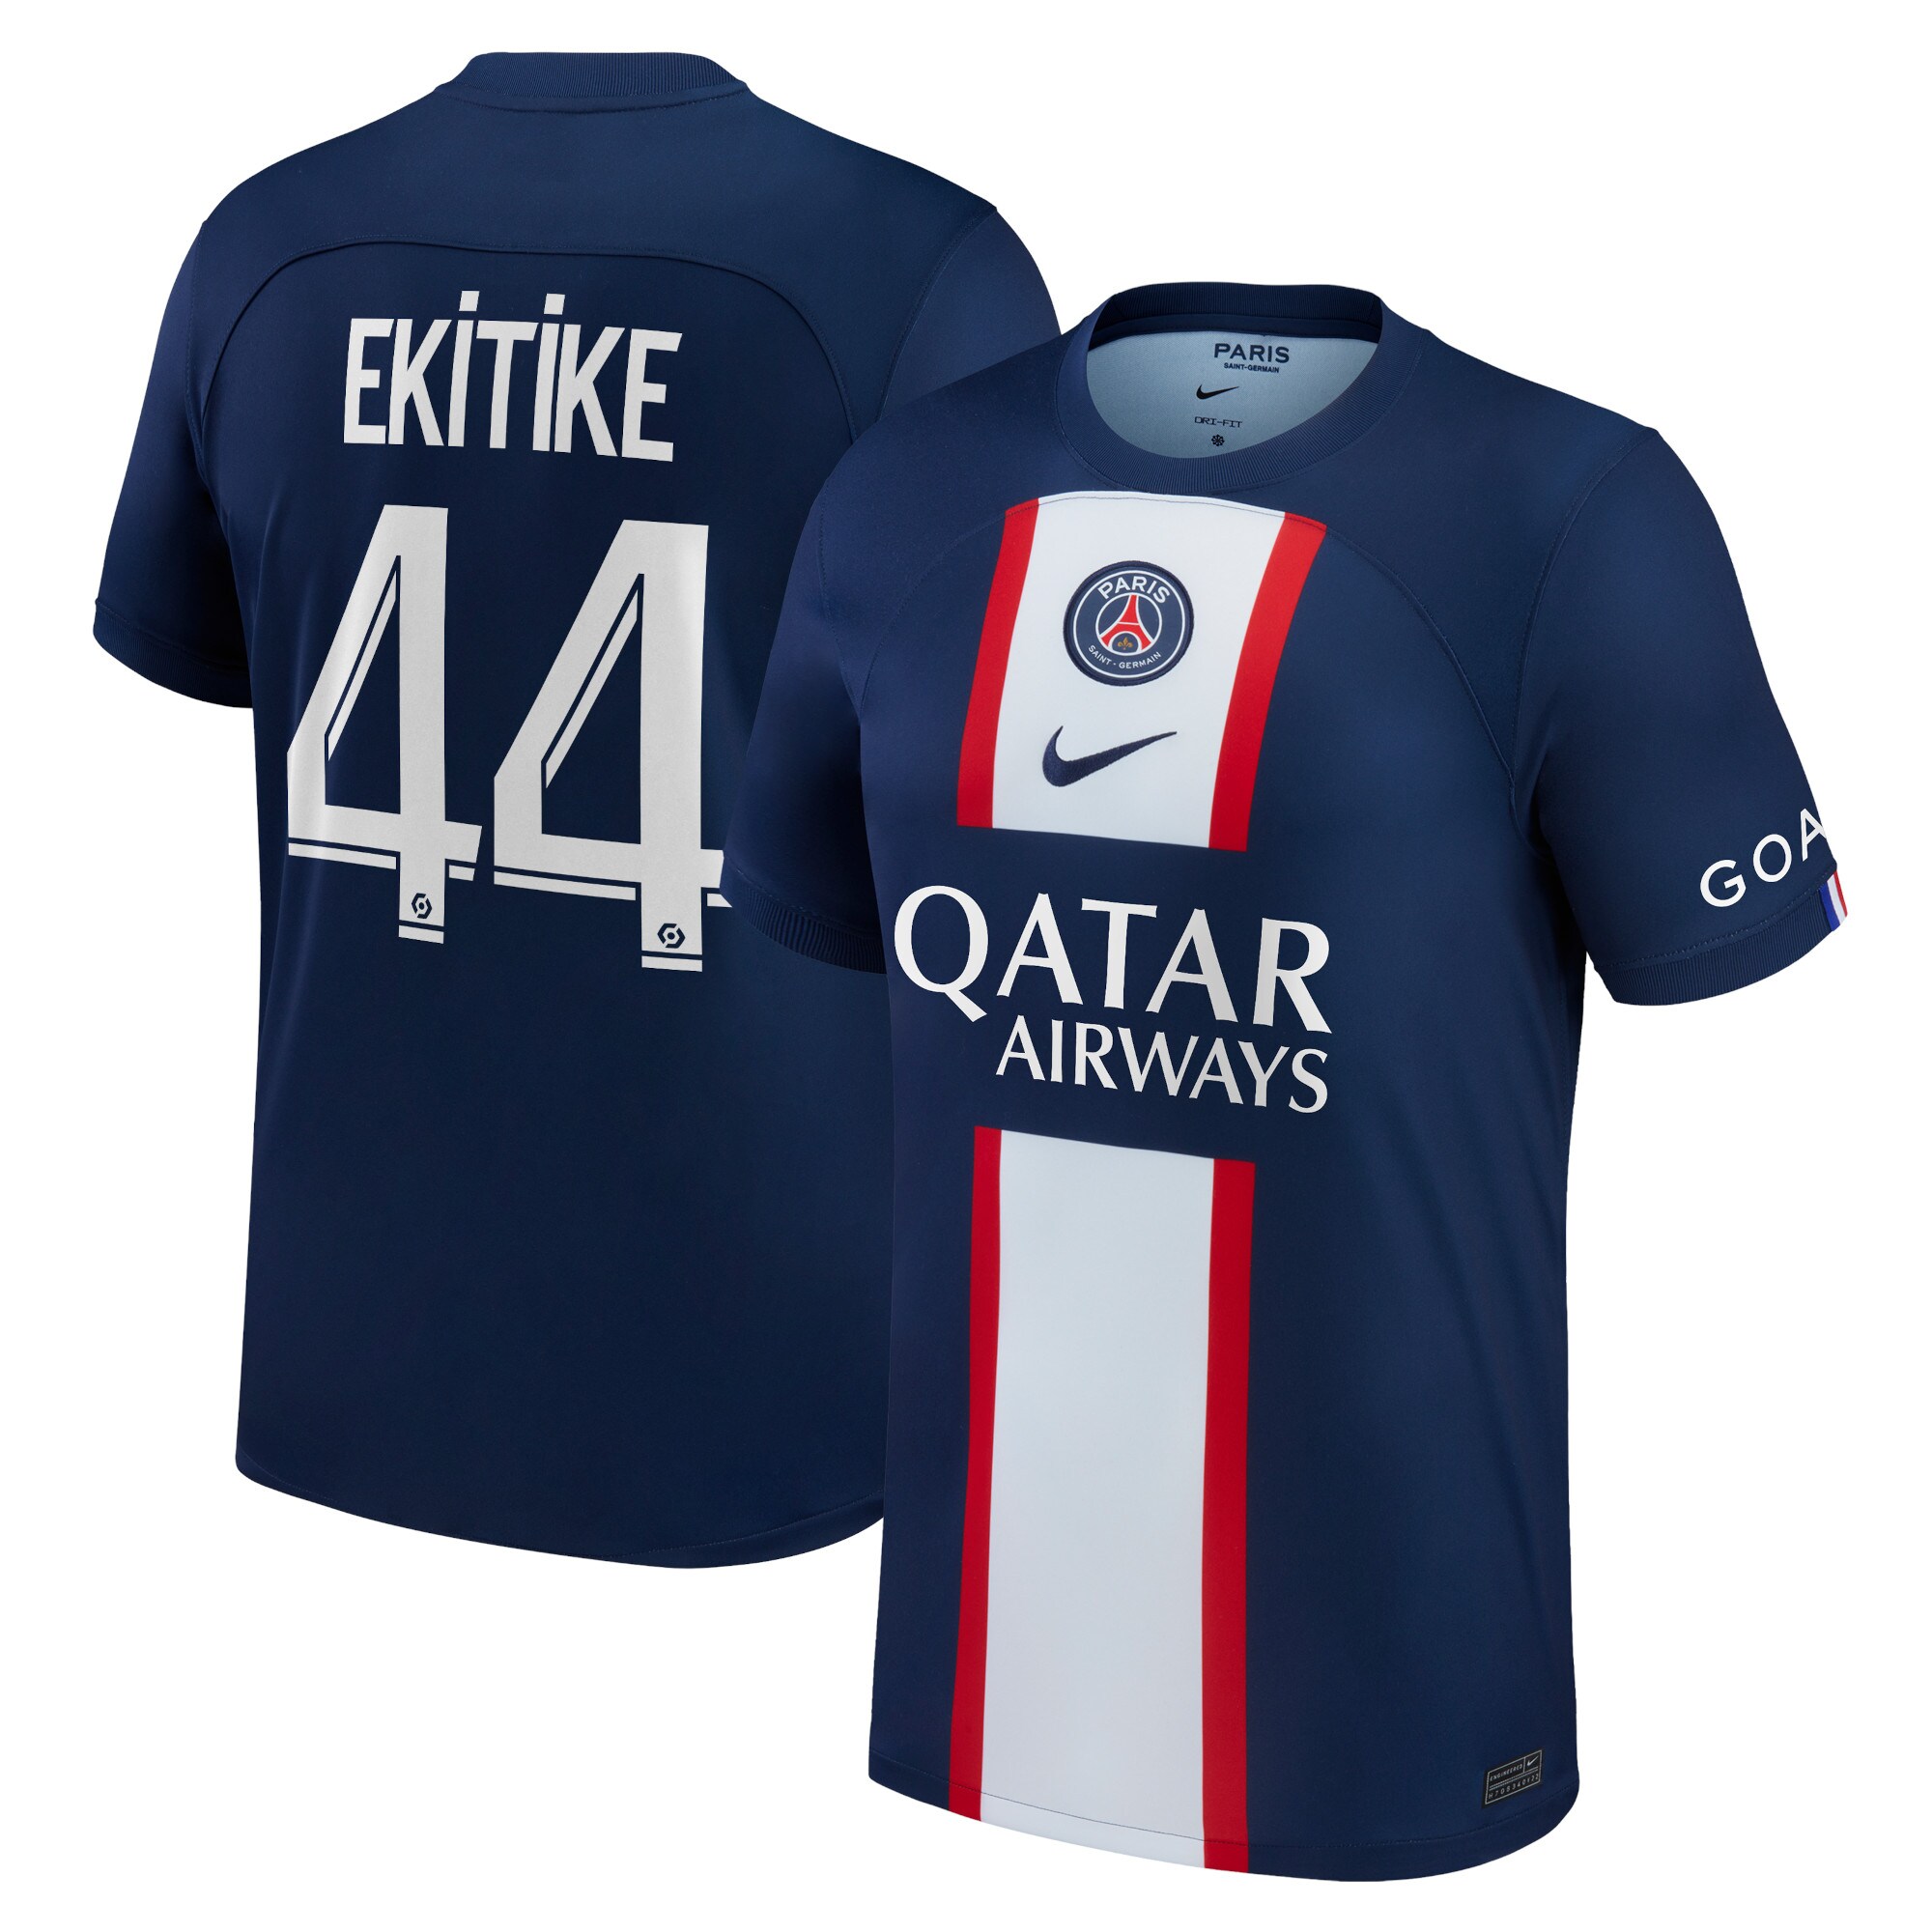 Paris Saint-Germain Home Stadium Shirt 2022-23 with Ekitike 44 printing